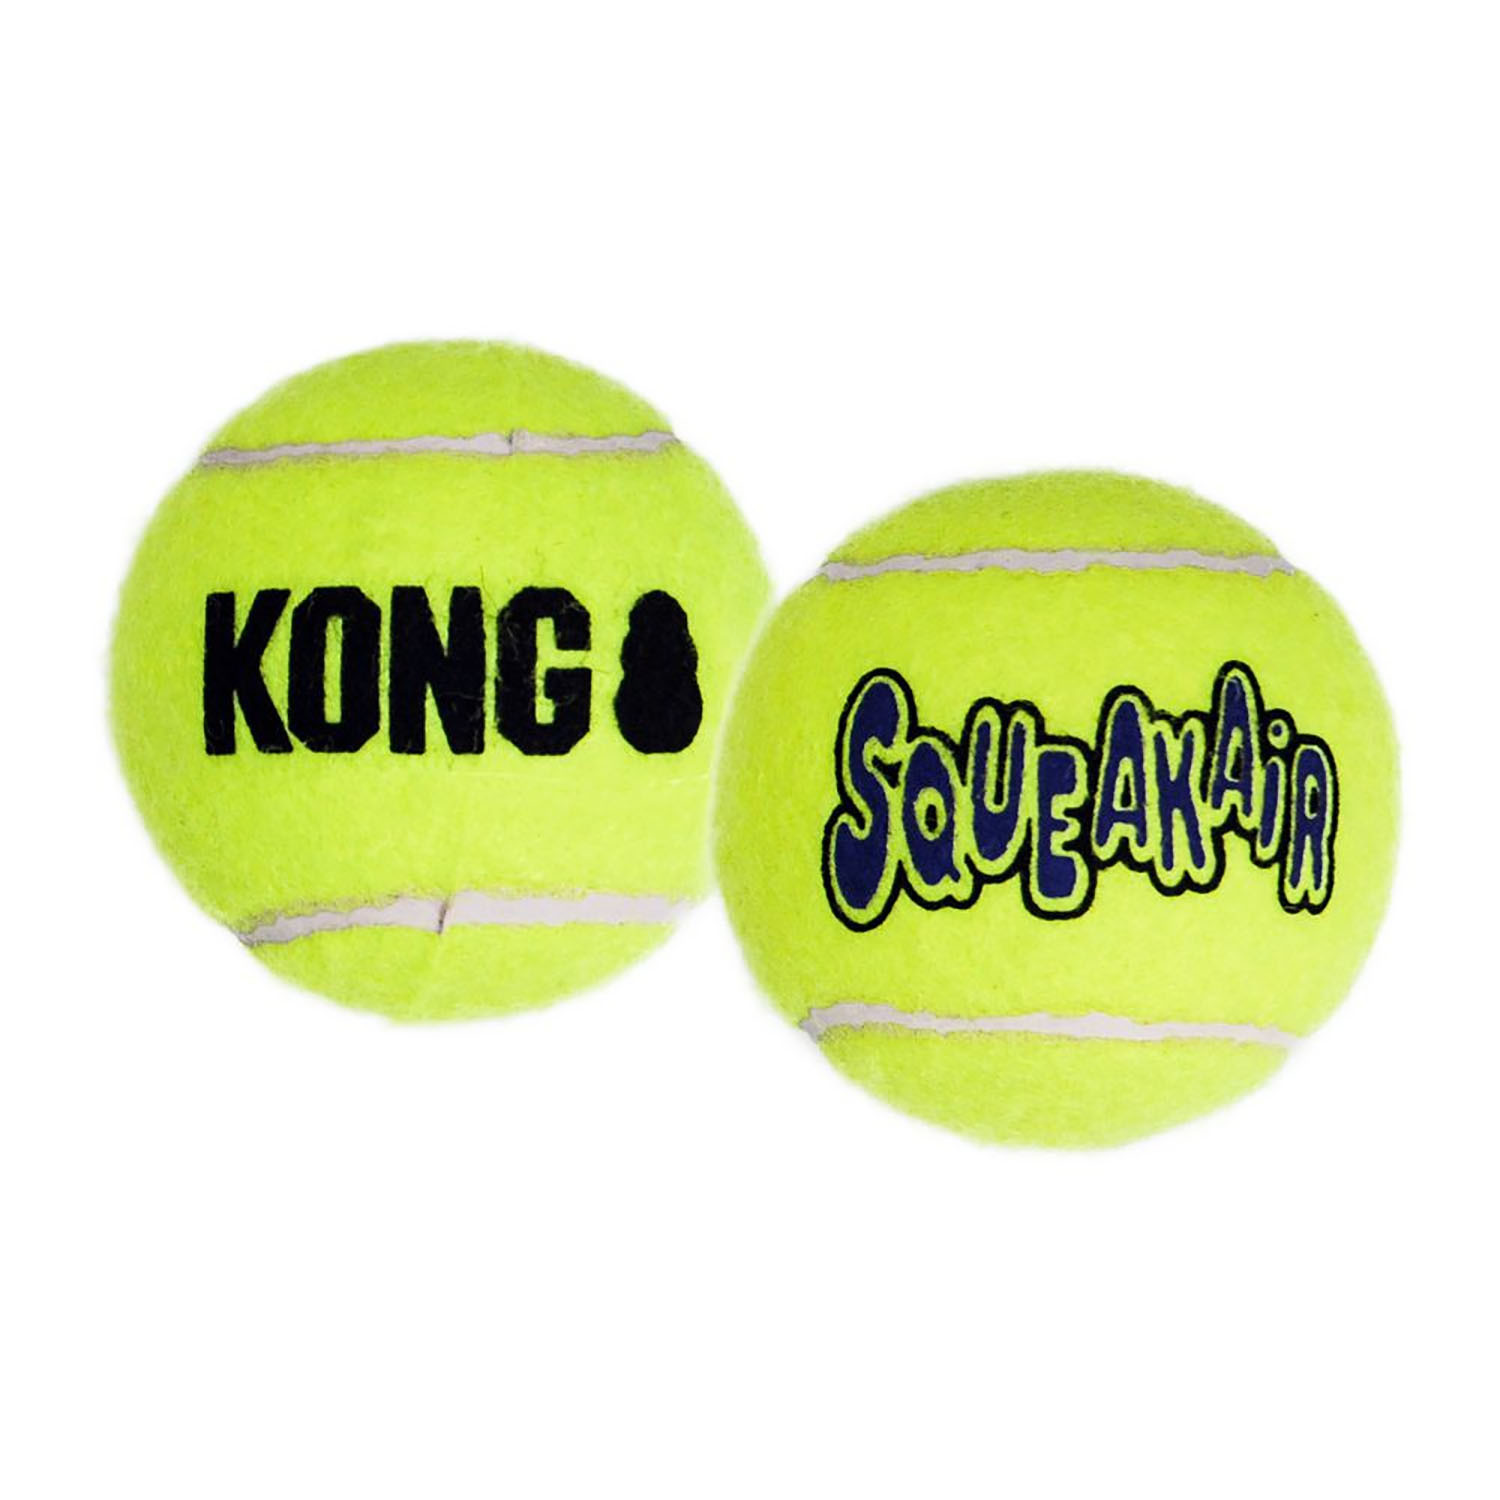 Kong Air Squeaker Tennis Ball Pack - Large Image 2